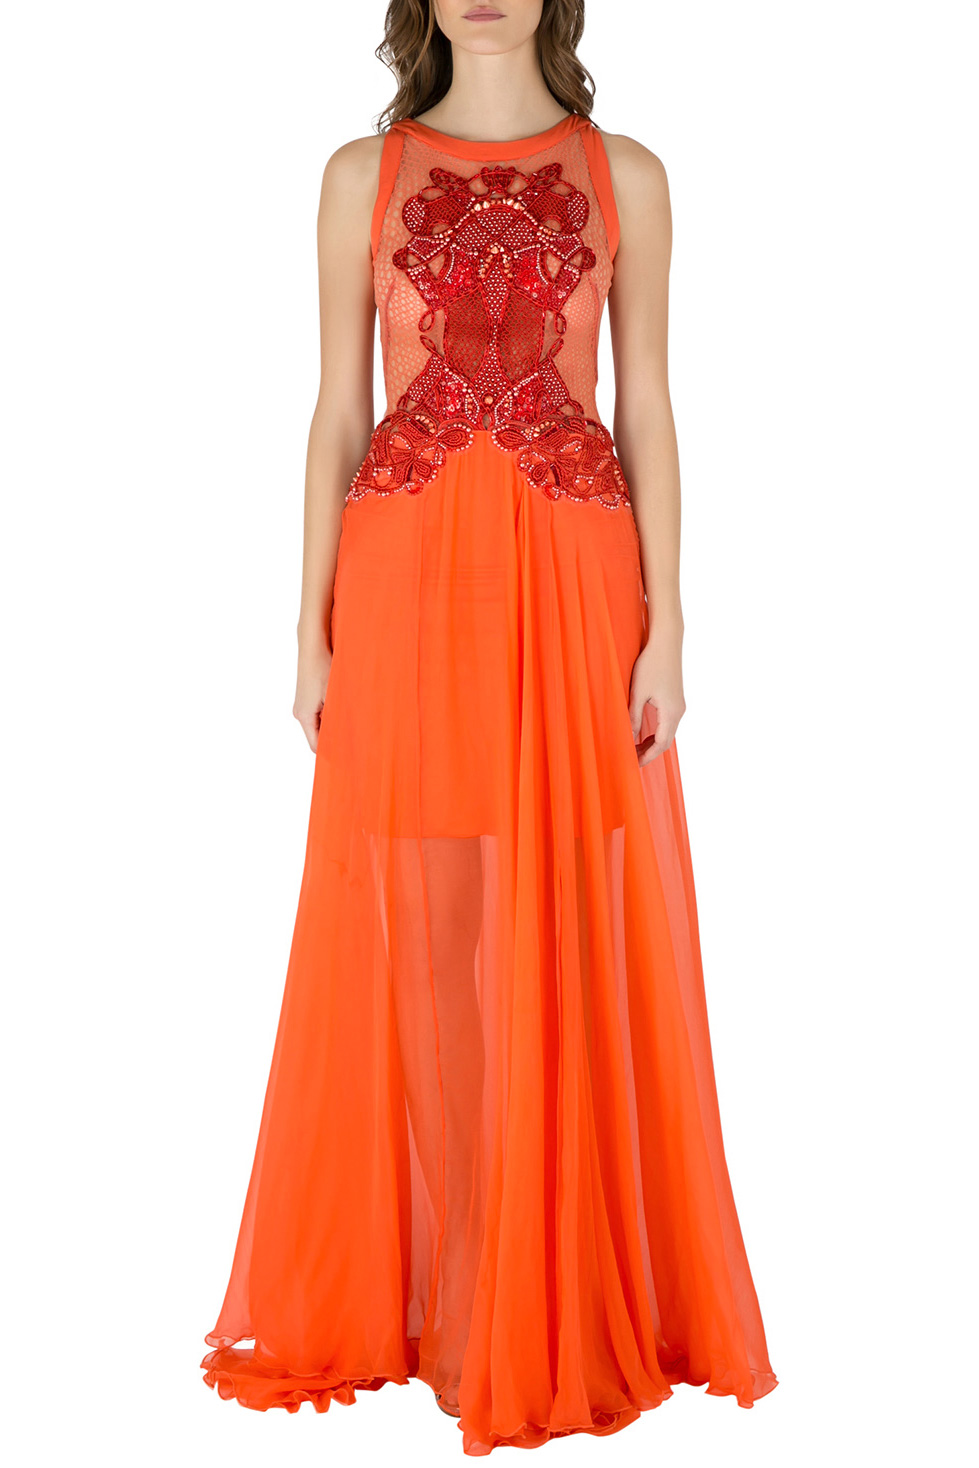 Zuhair Murad Orange Silk Chiffon Embellished Bodice Gown S Zuhair Murad ...